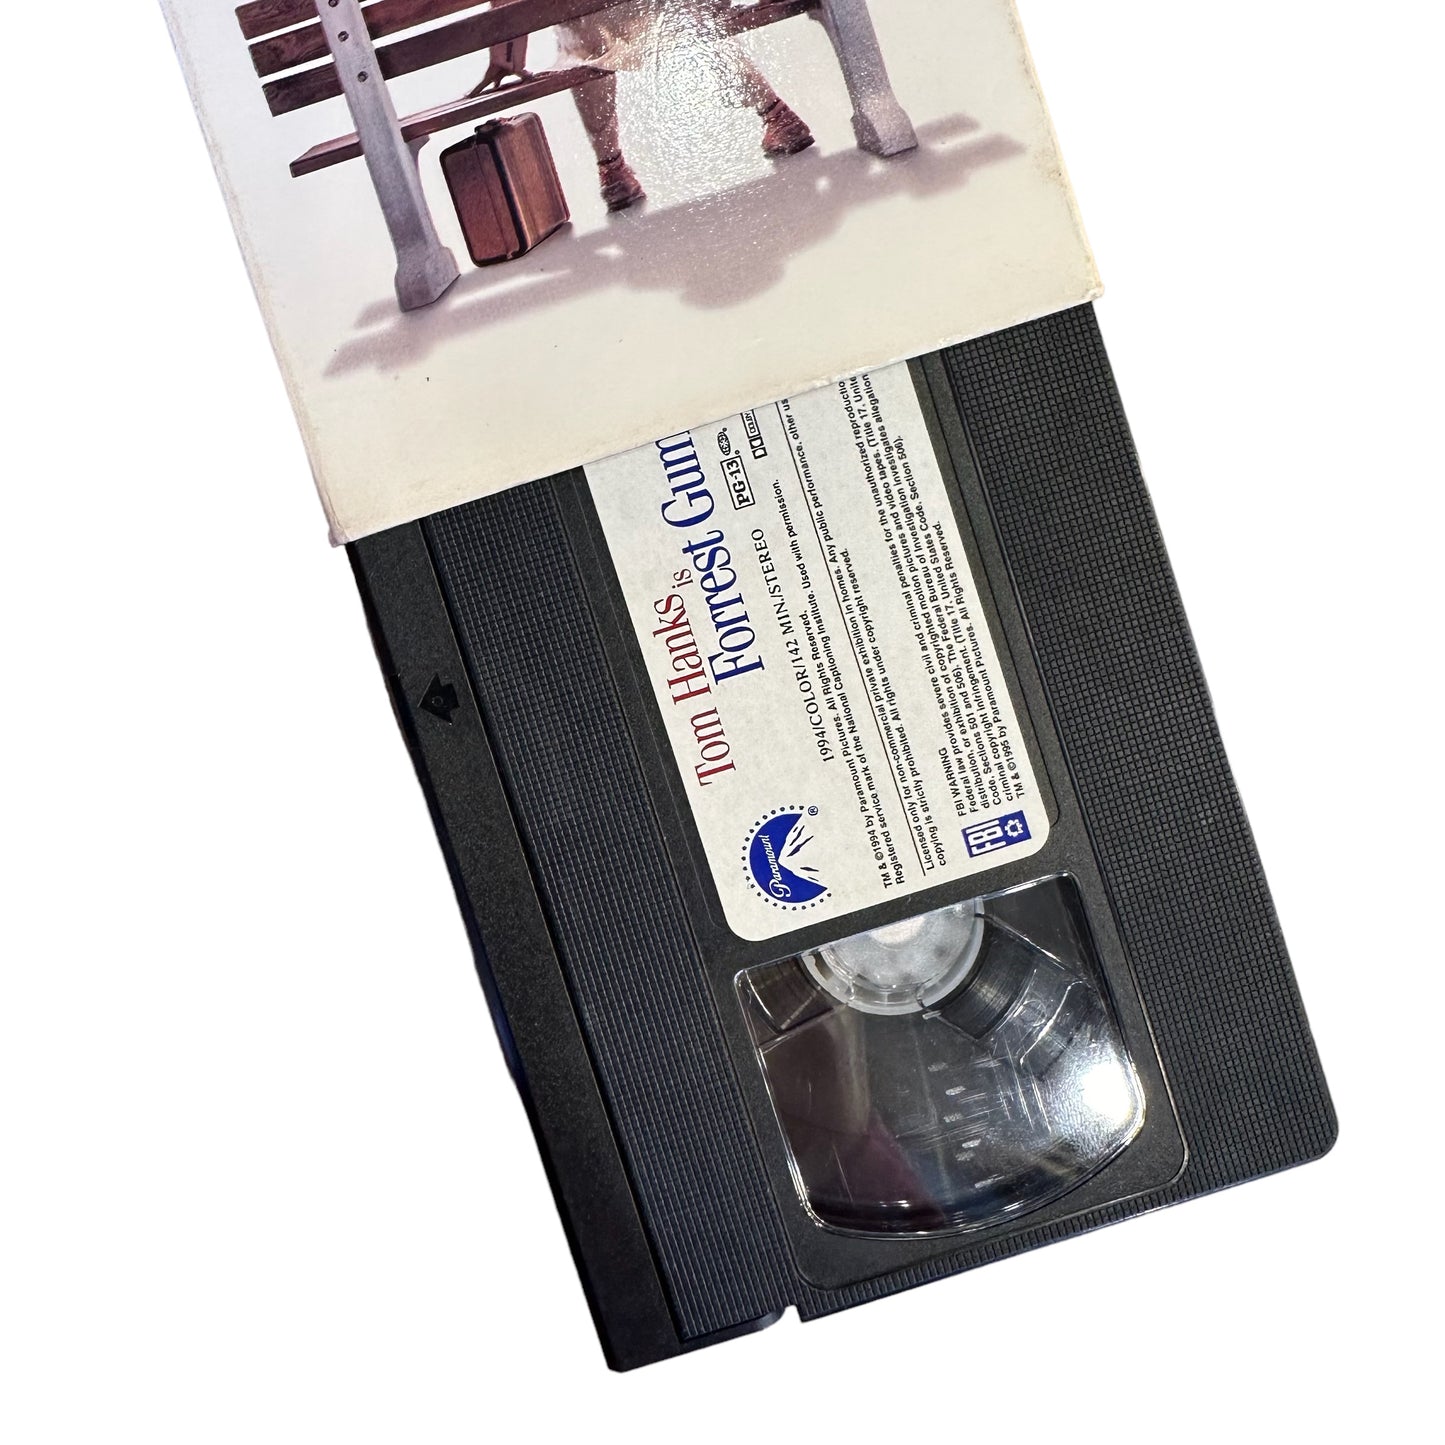 VHS ビデオテープ 輸入版 Forrest Gump フォレスト・ガンプ 海外版 USA アメリカ ヴィンテージ ビデオ 紙ジャケ